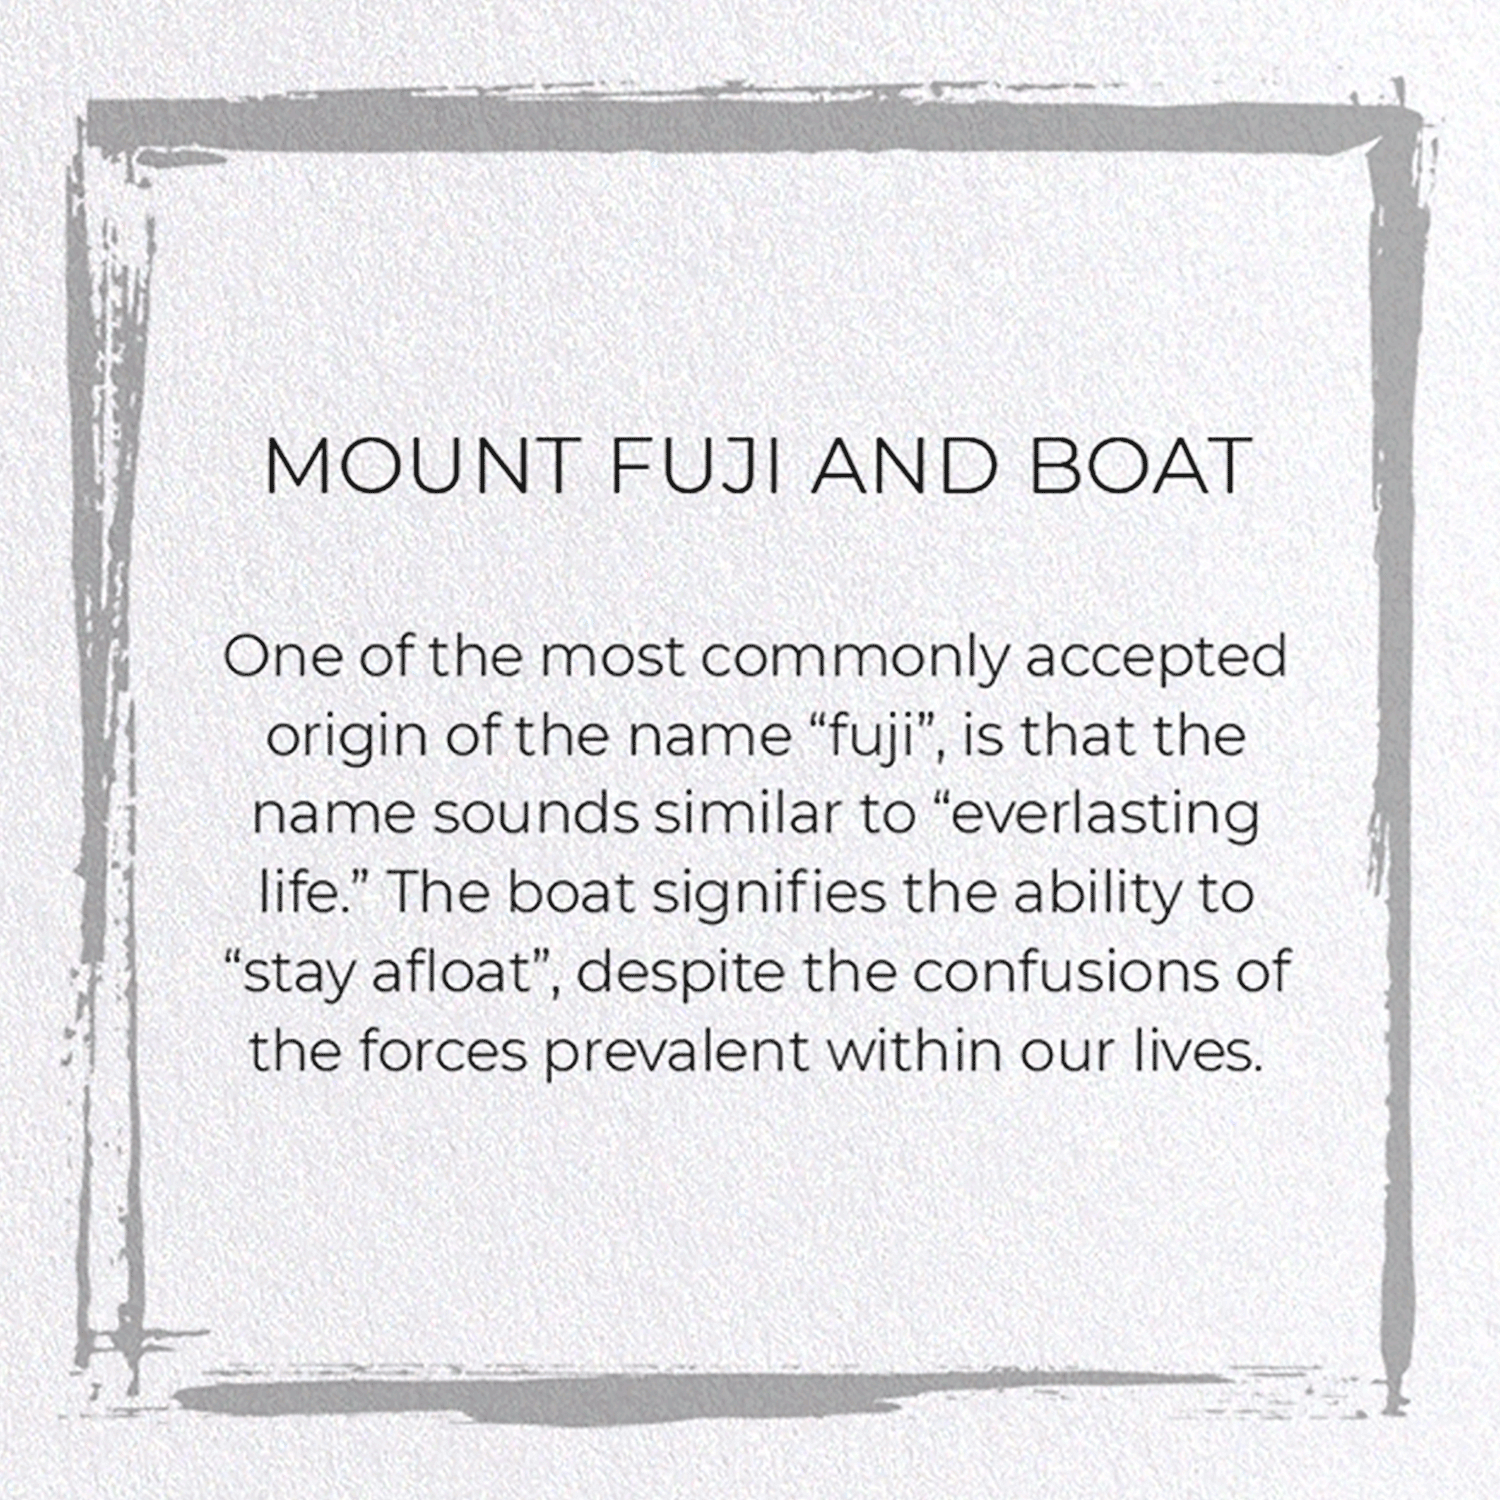 MOUNT FUJI AND BOAT